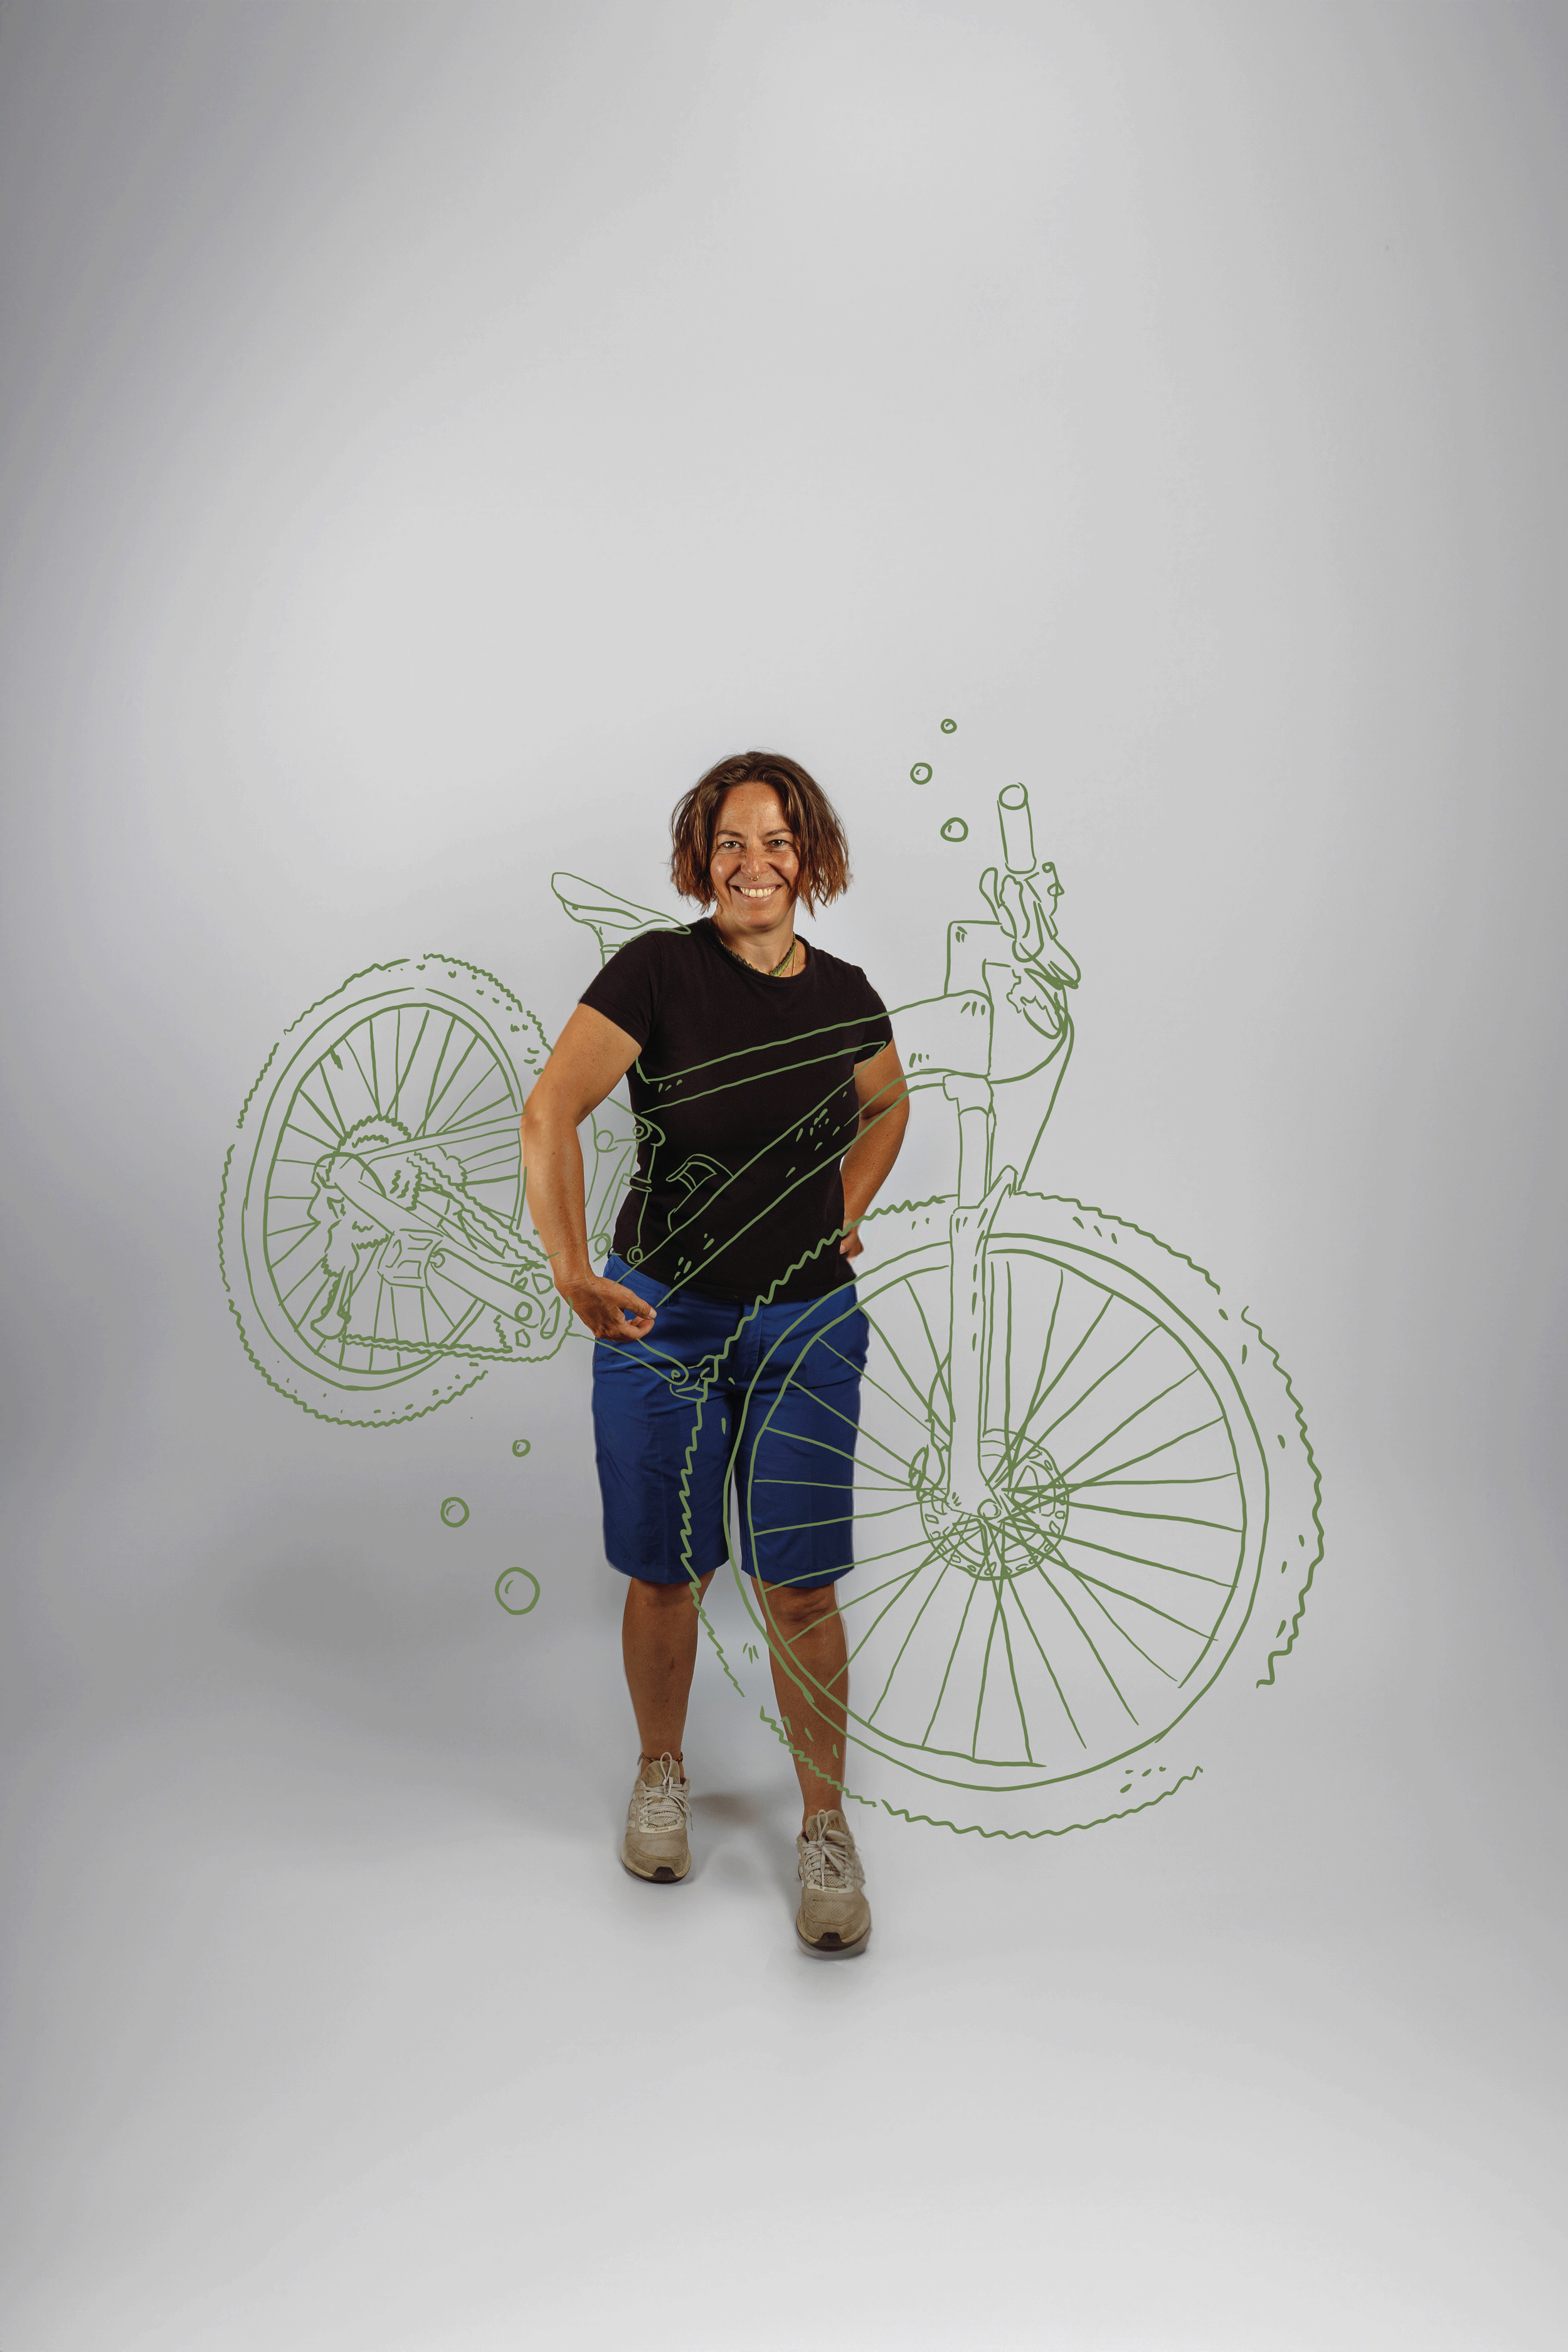 Diana Marggraff
Bike Guide / Coordinatrice